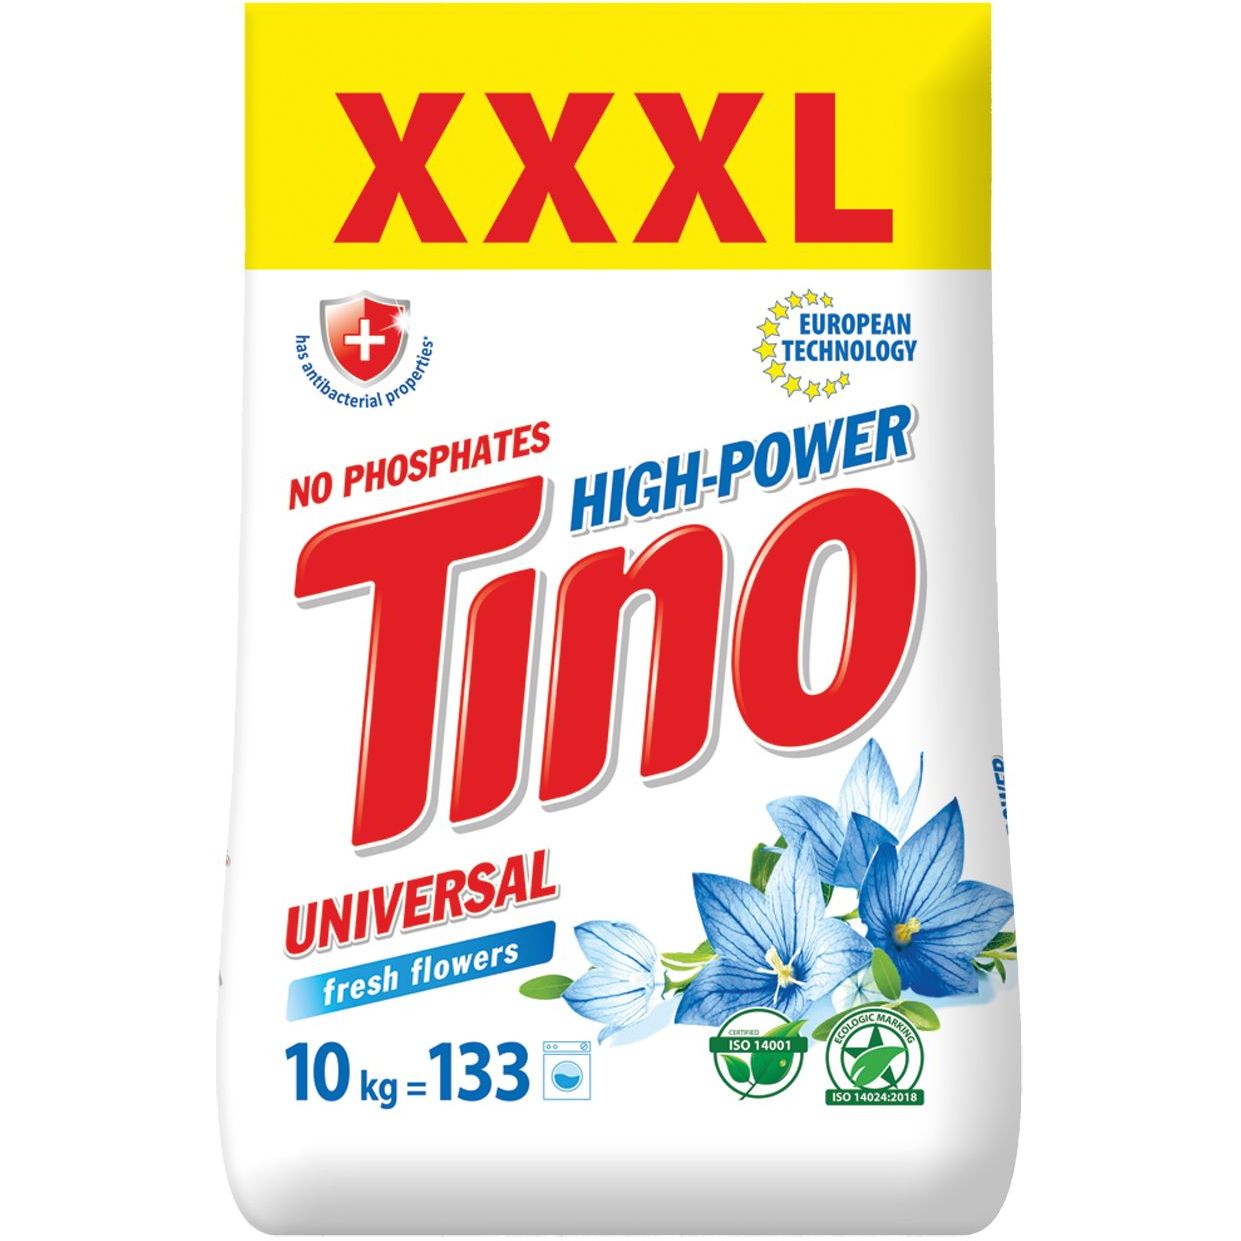 Порошок стиральный Tino High-Power Universal Fresh flowers, 10 кг - фото 1